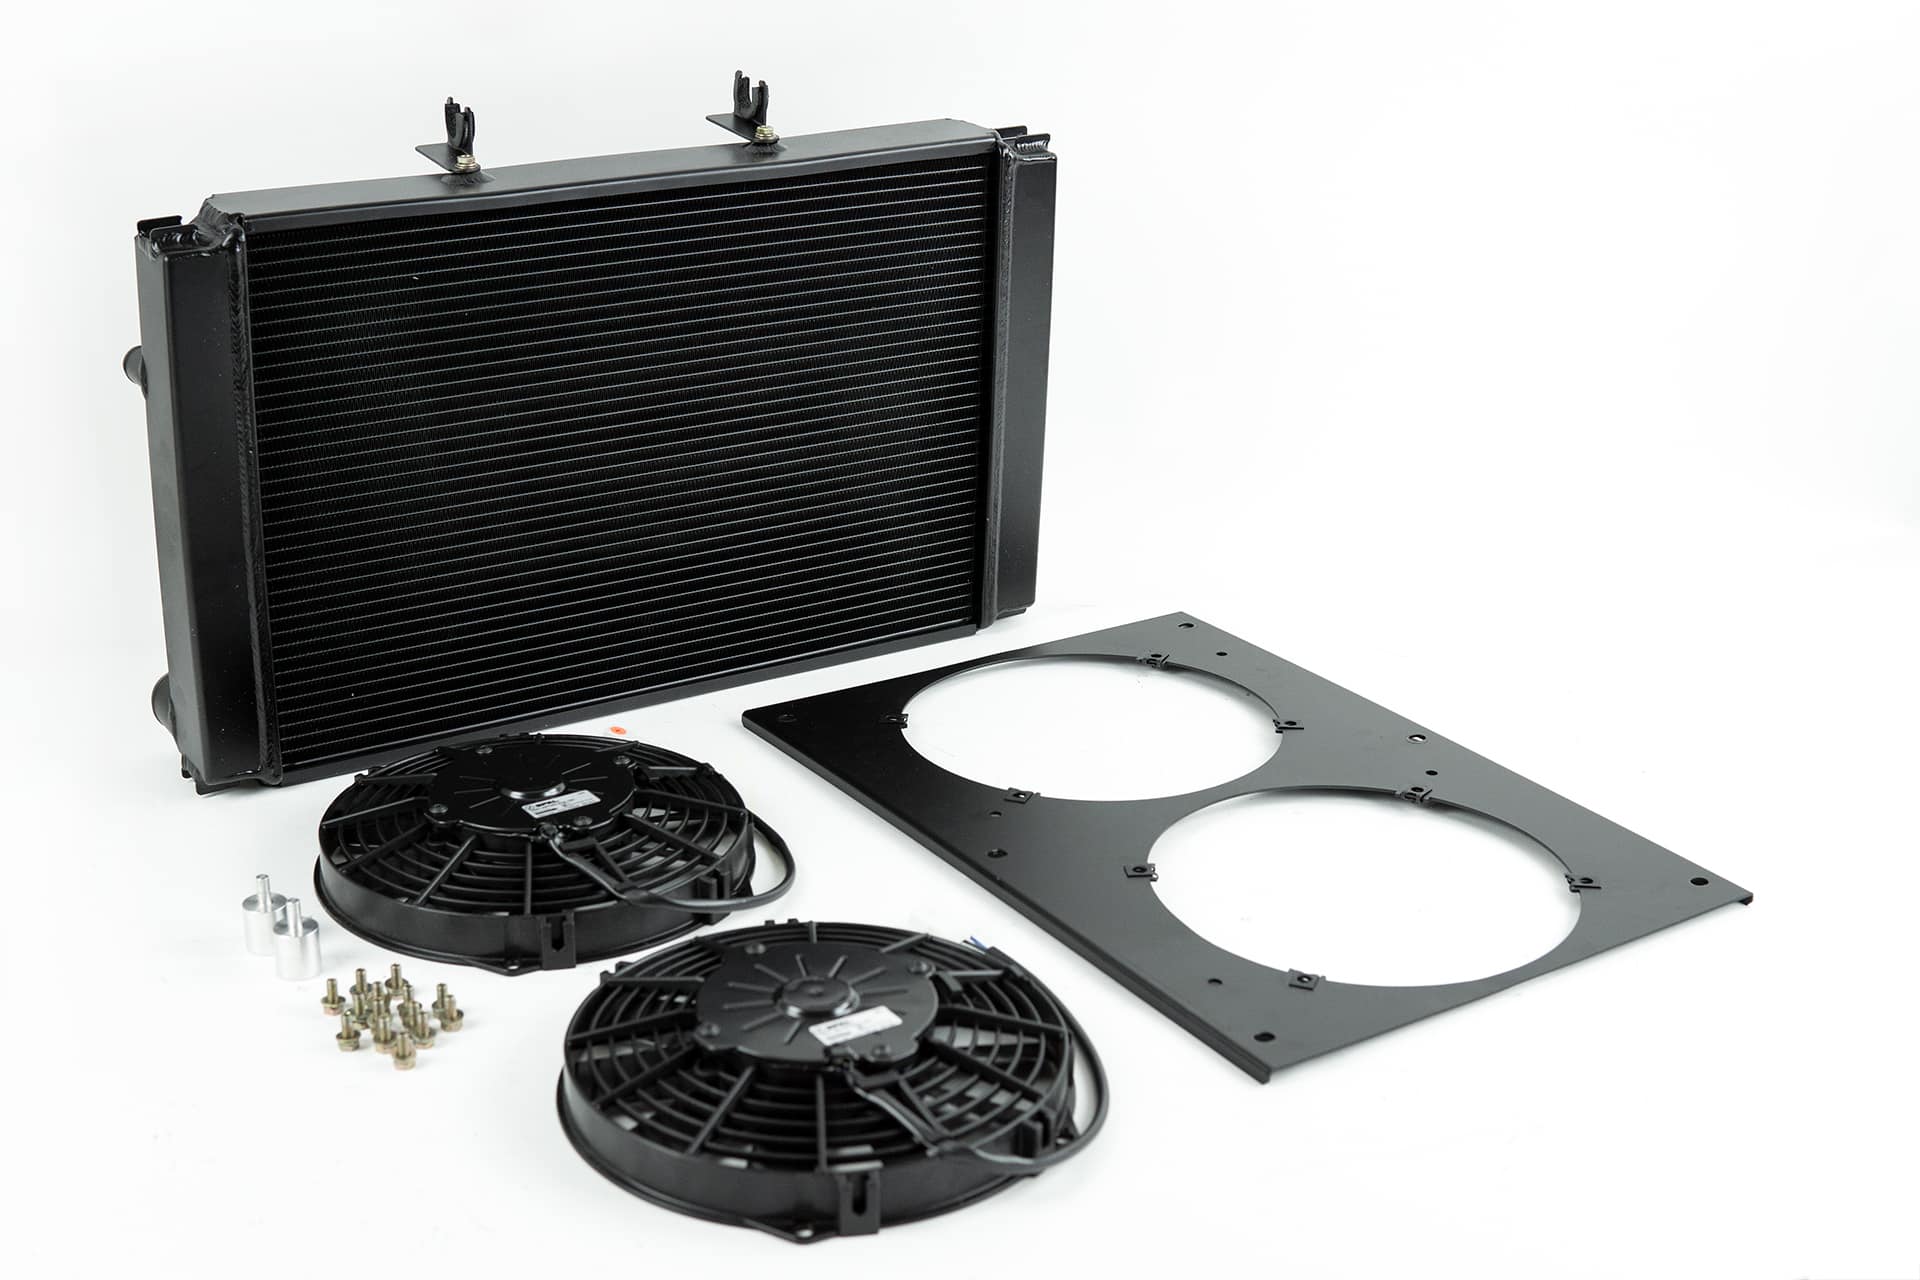 CSF Radiator Kit w/ Fans - 944, 951, 968 (83-91) - All Stick Shift - Aluminum Performance Version - CSF #7088 & #8180